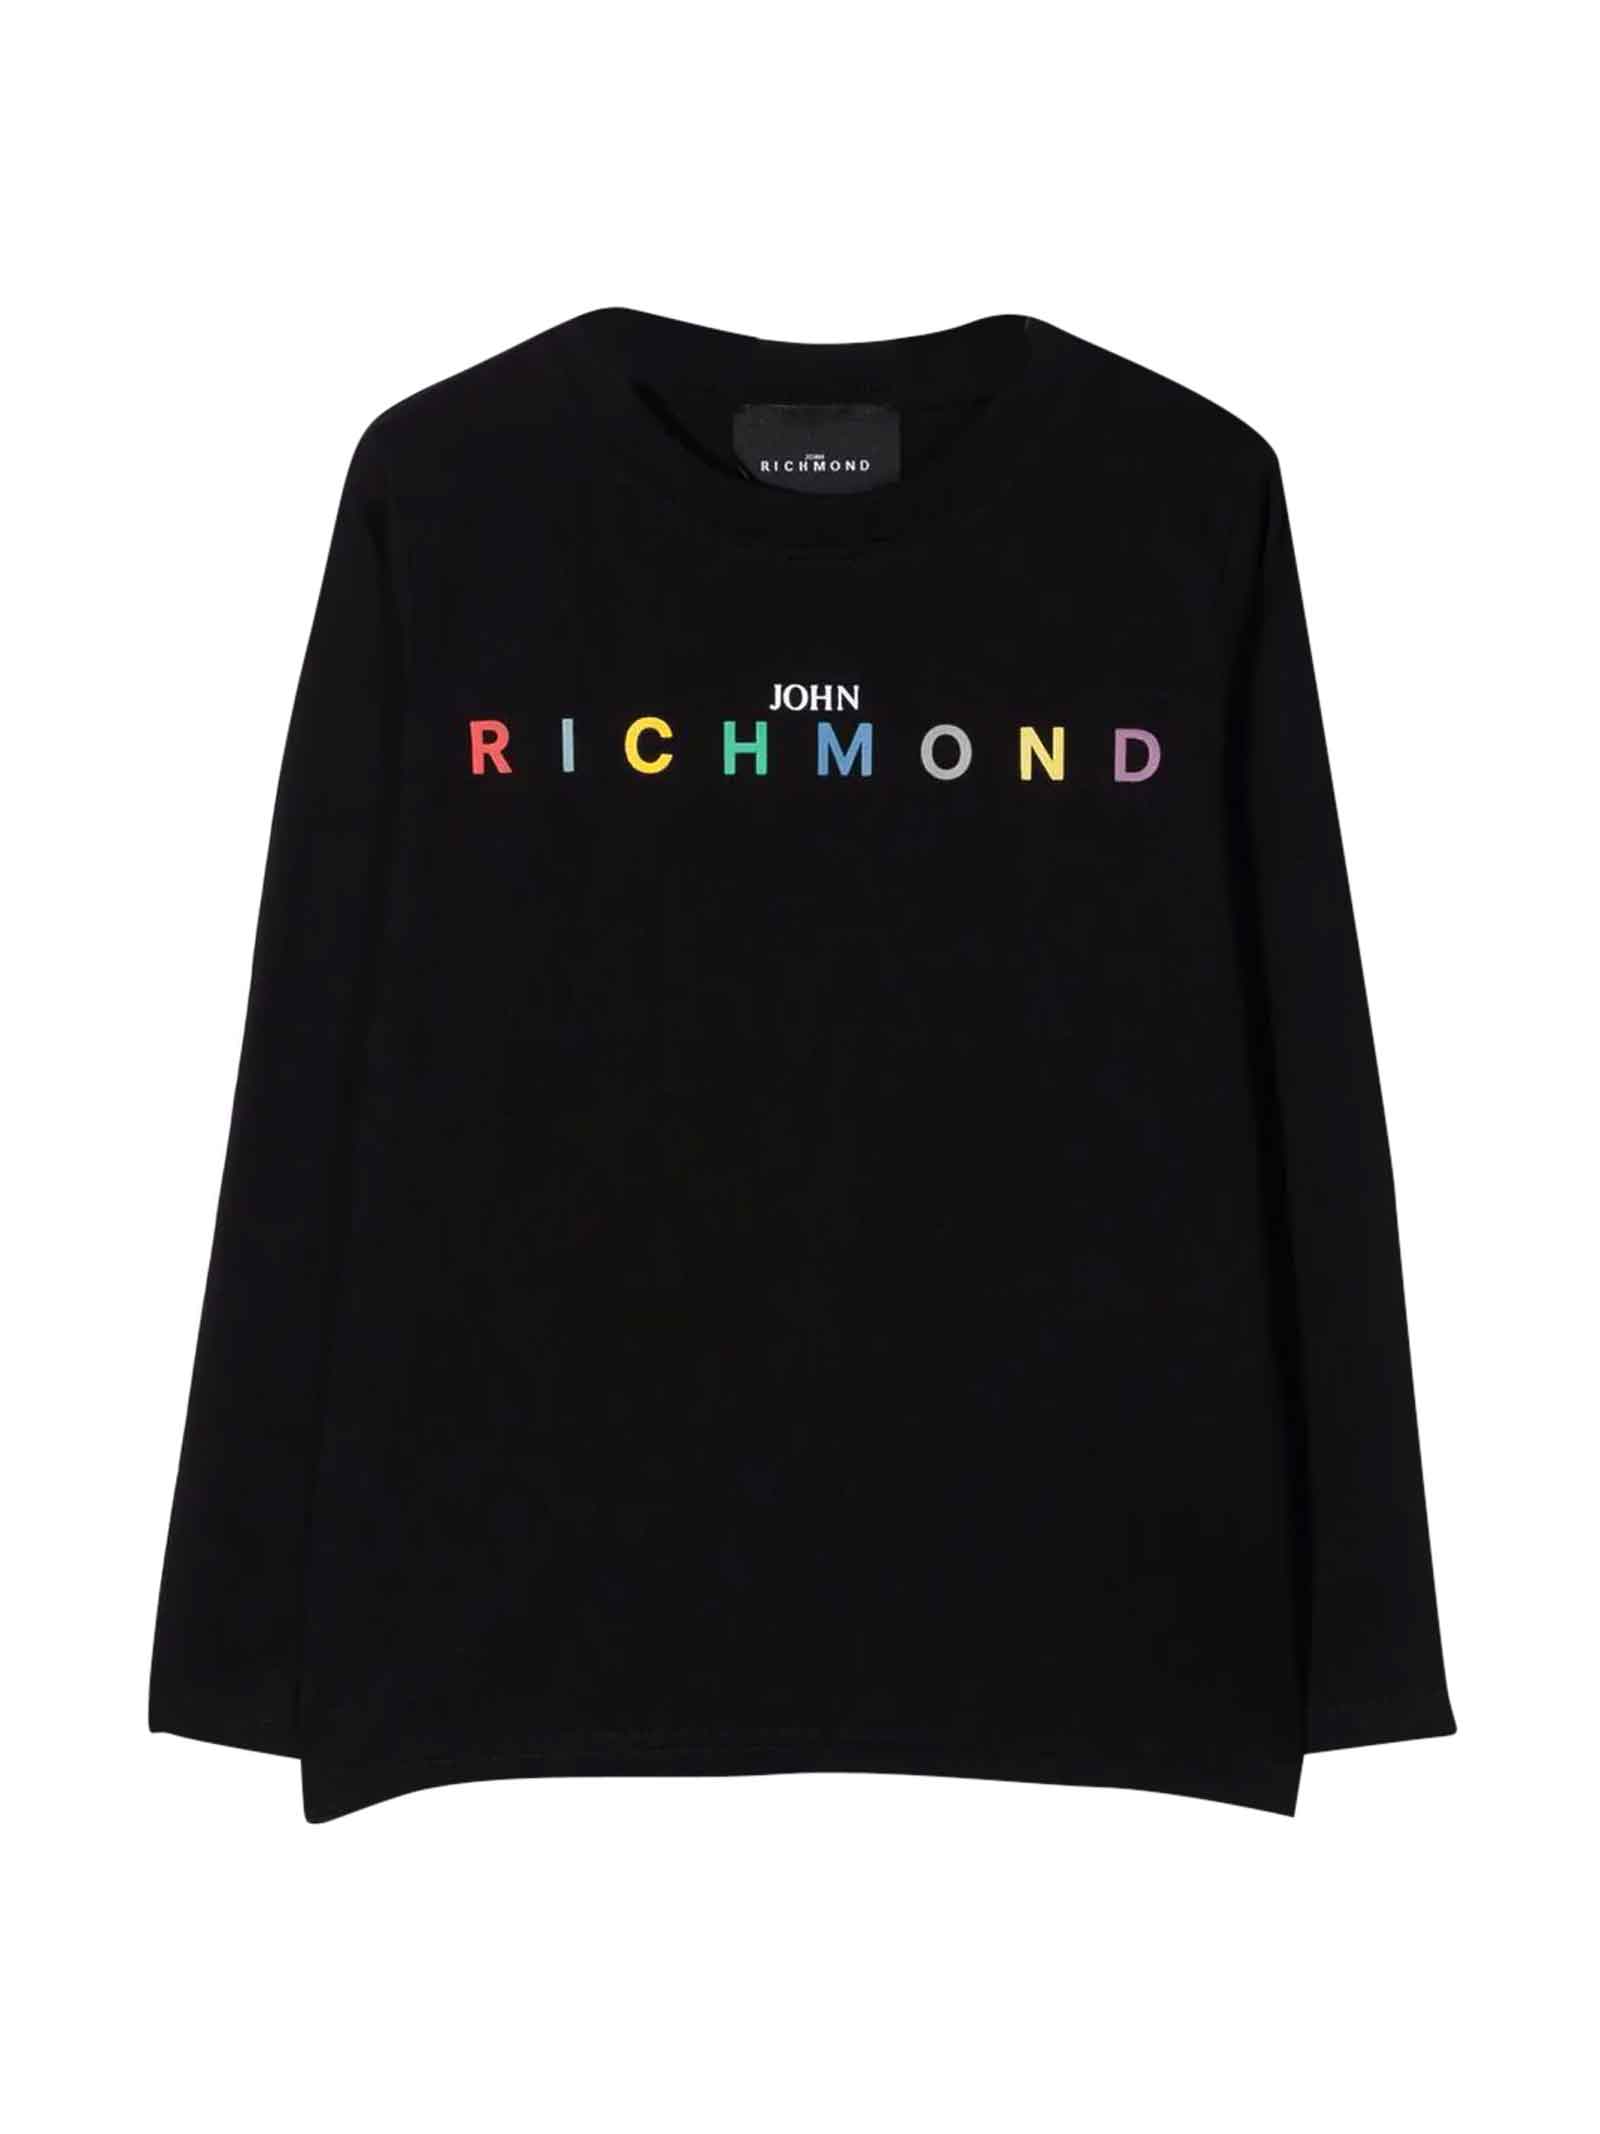 John Richmond Black T-shirt With Multicolor Print